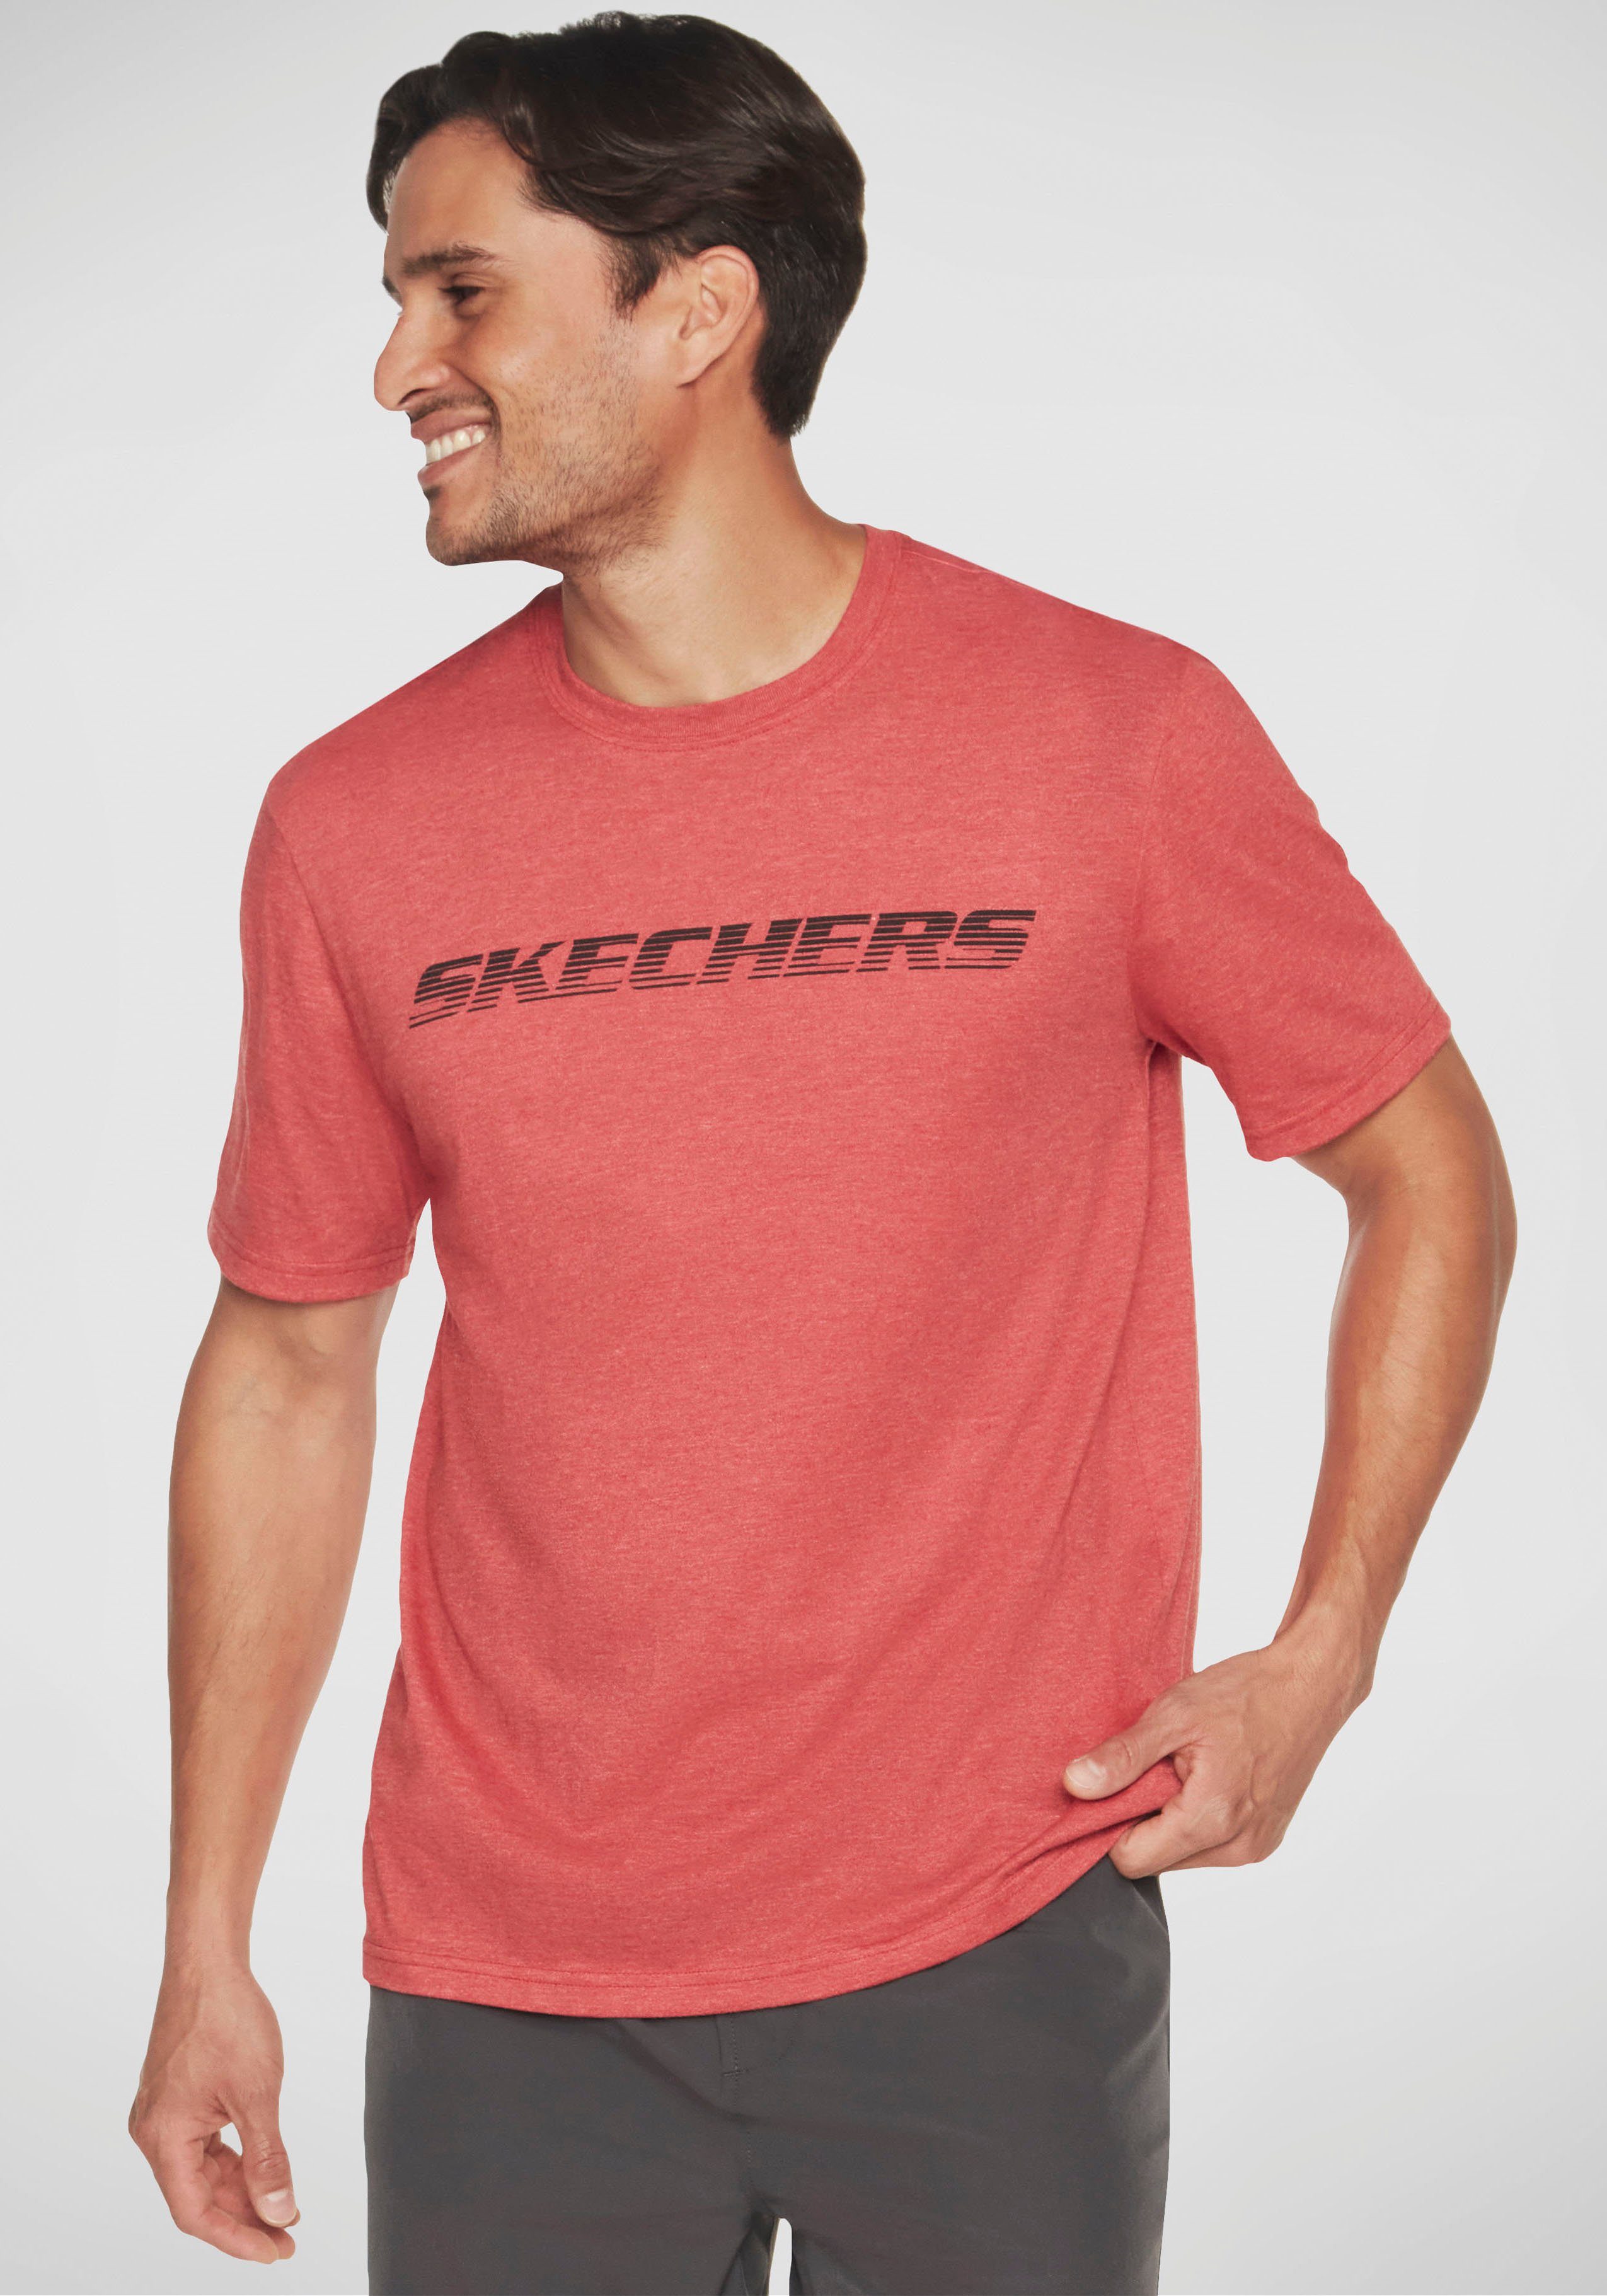 Skechers T-Shirt rot MOTION TEE